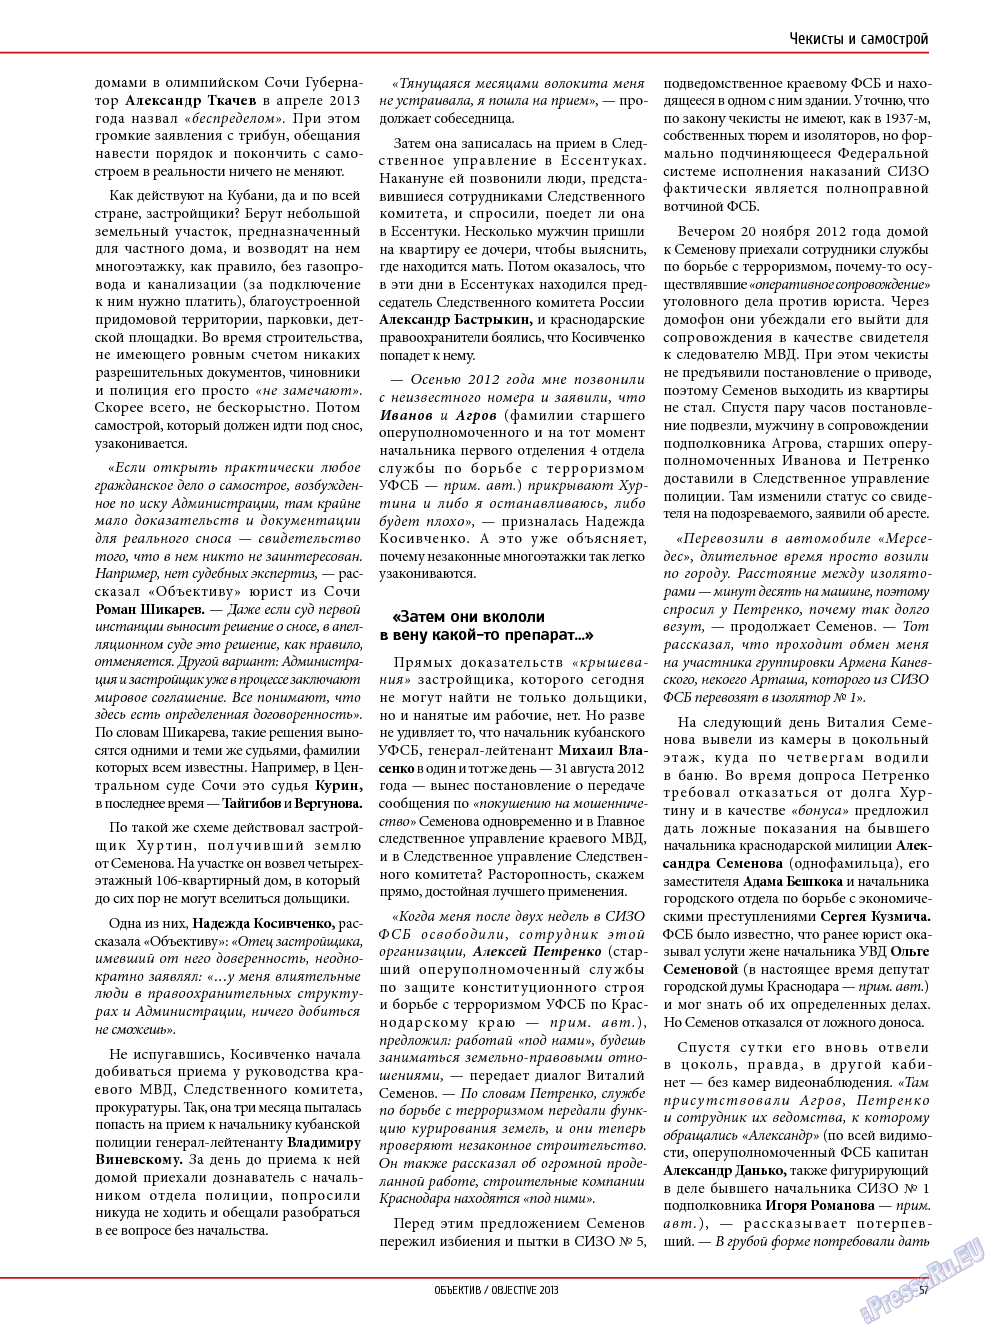 Объектив EU, журнал. 2014 №1 стр.57